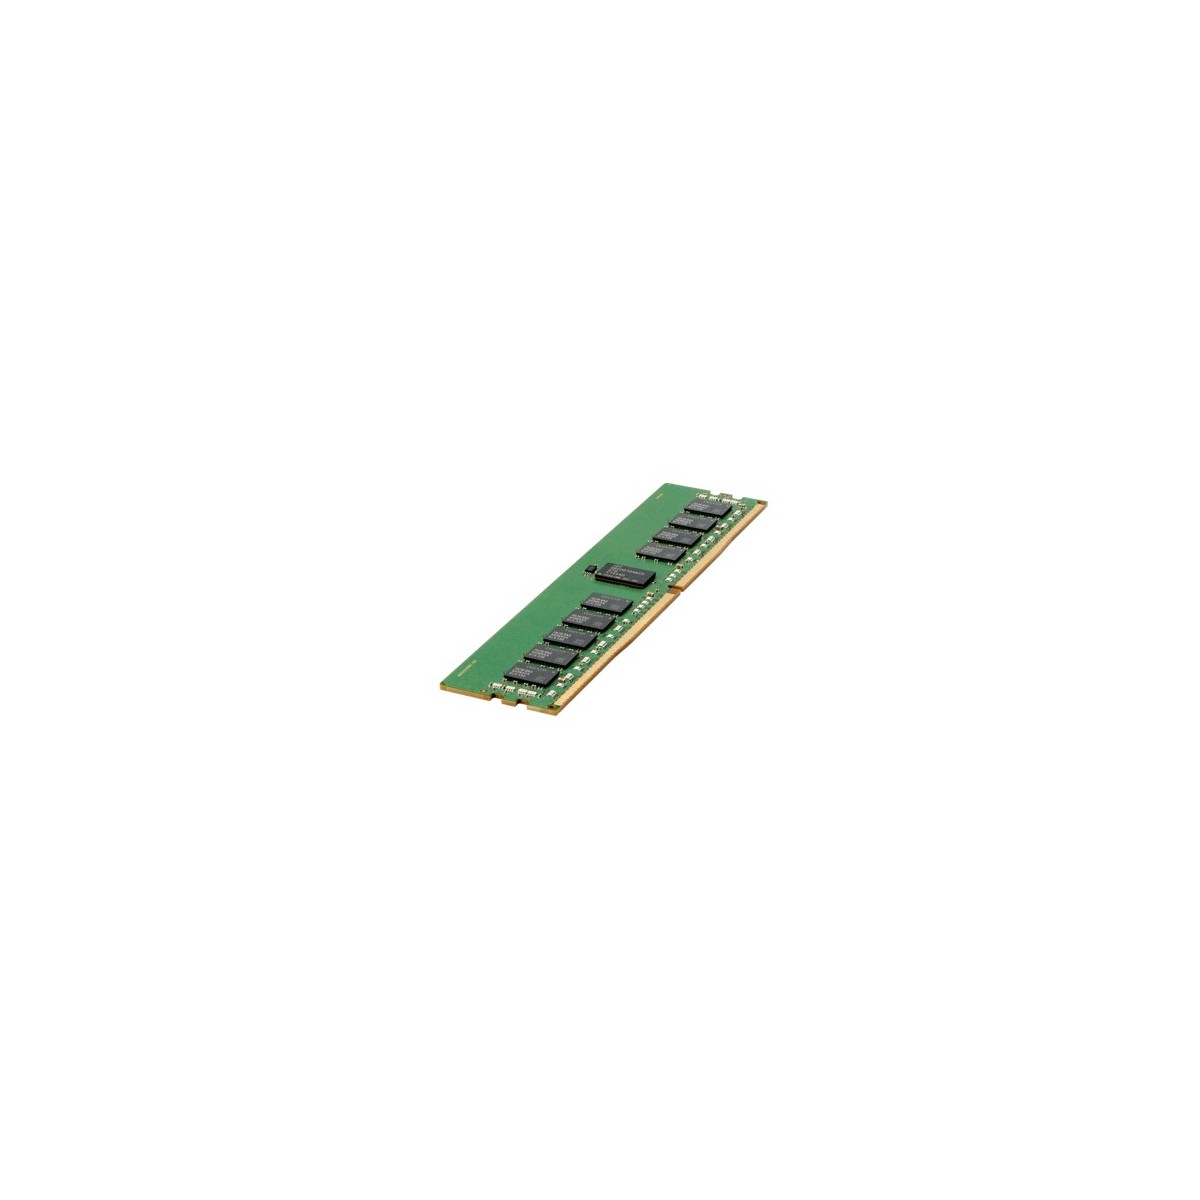 HP Enterprise 64GB DDR4-2400 - 64 GB - DDR3L - 2400 MHz - 288-pin DIMM - Green